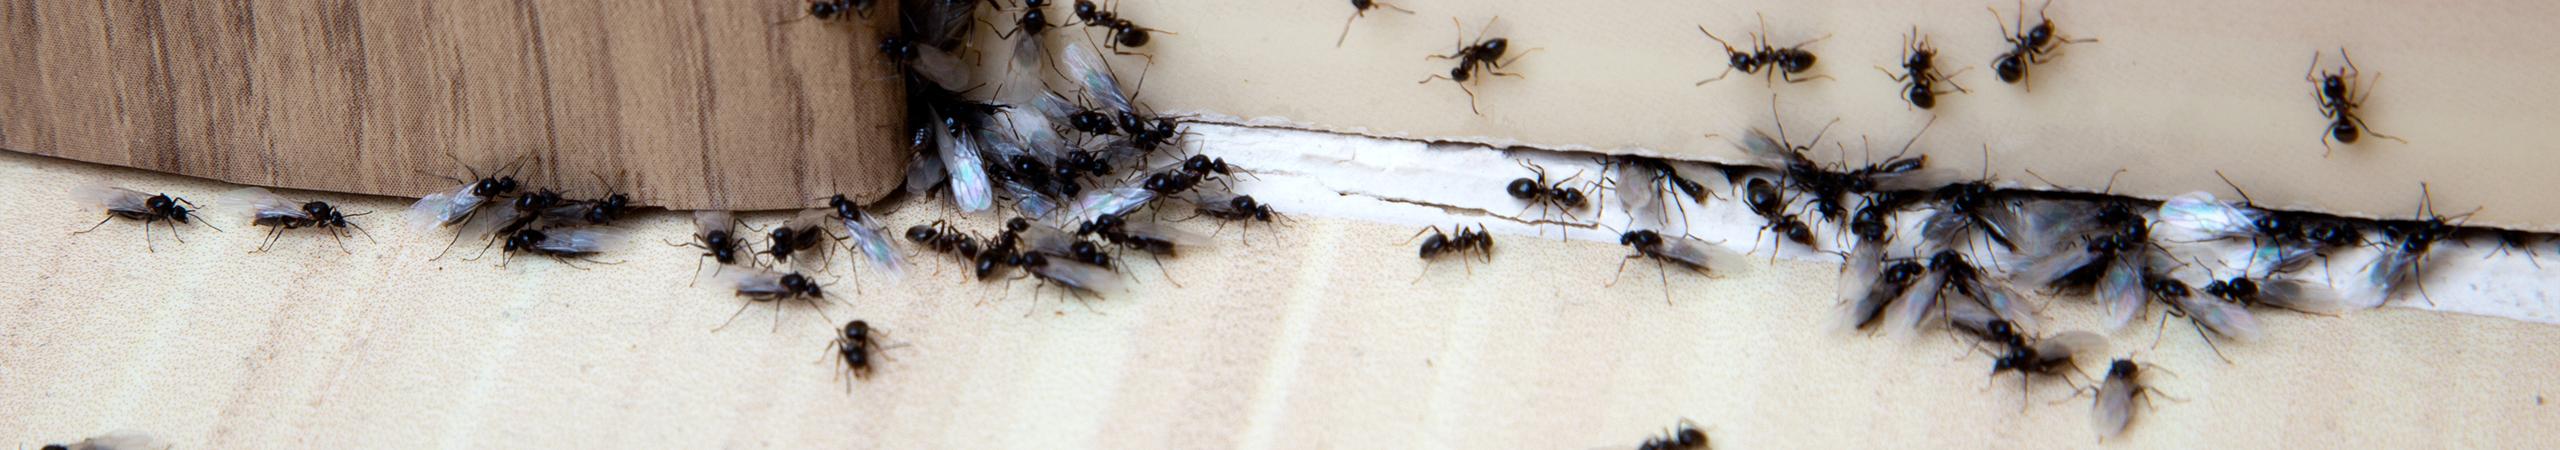 ants on a baseboard